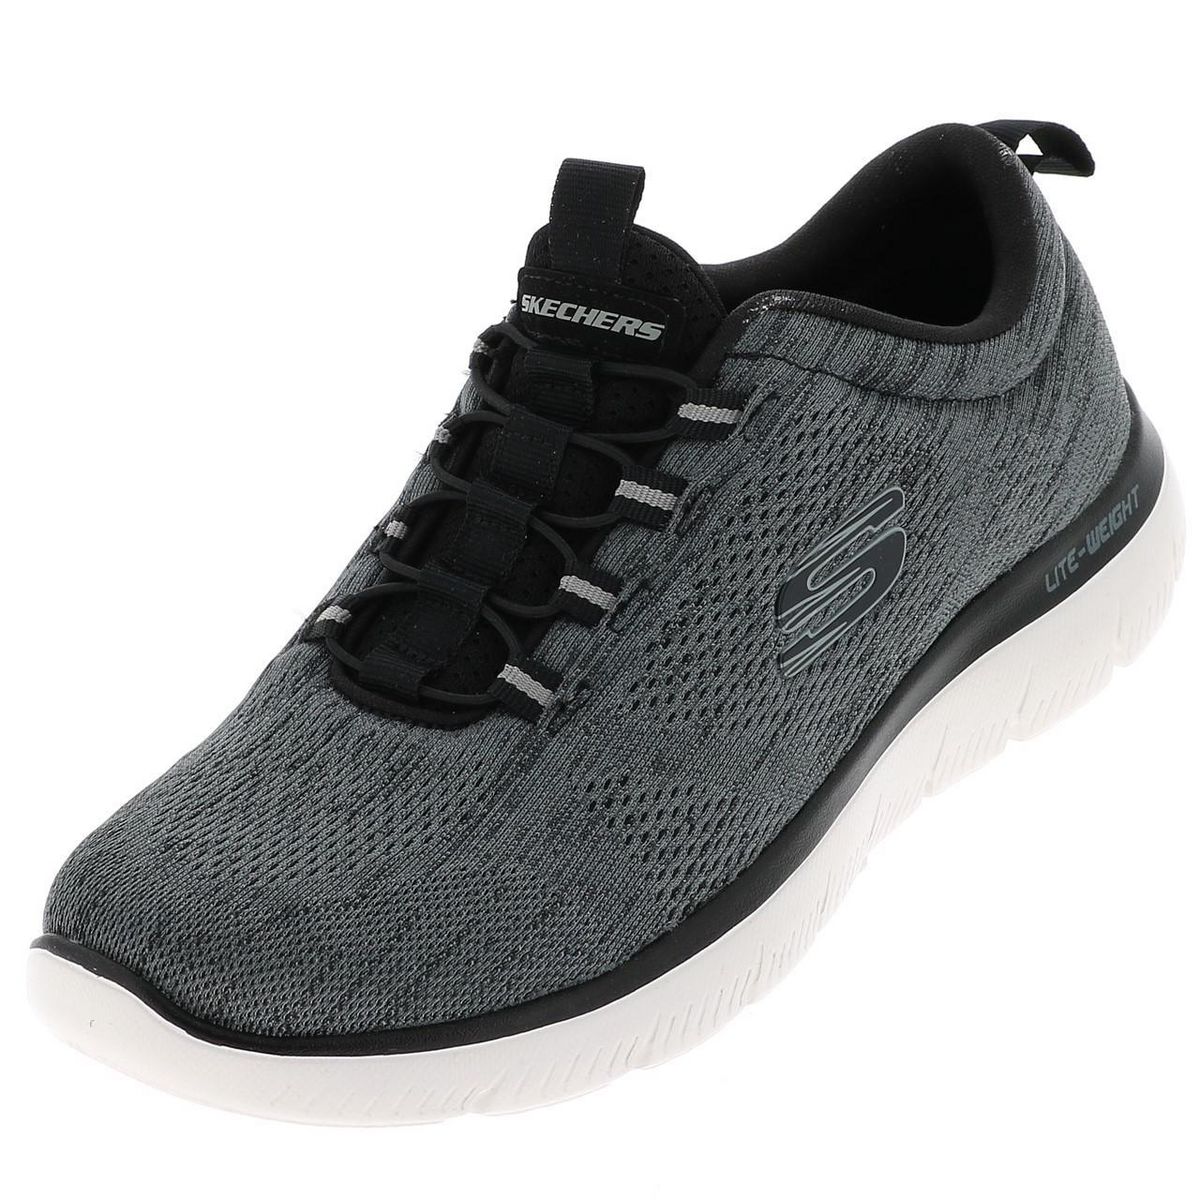 Zo snel als een flits Microbe tsunami SKECHERS Chaussures running mode Skechers Summits gris confort homme 47243 pas  cher - Auchan.fr